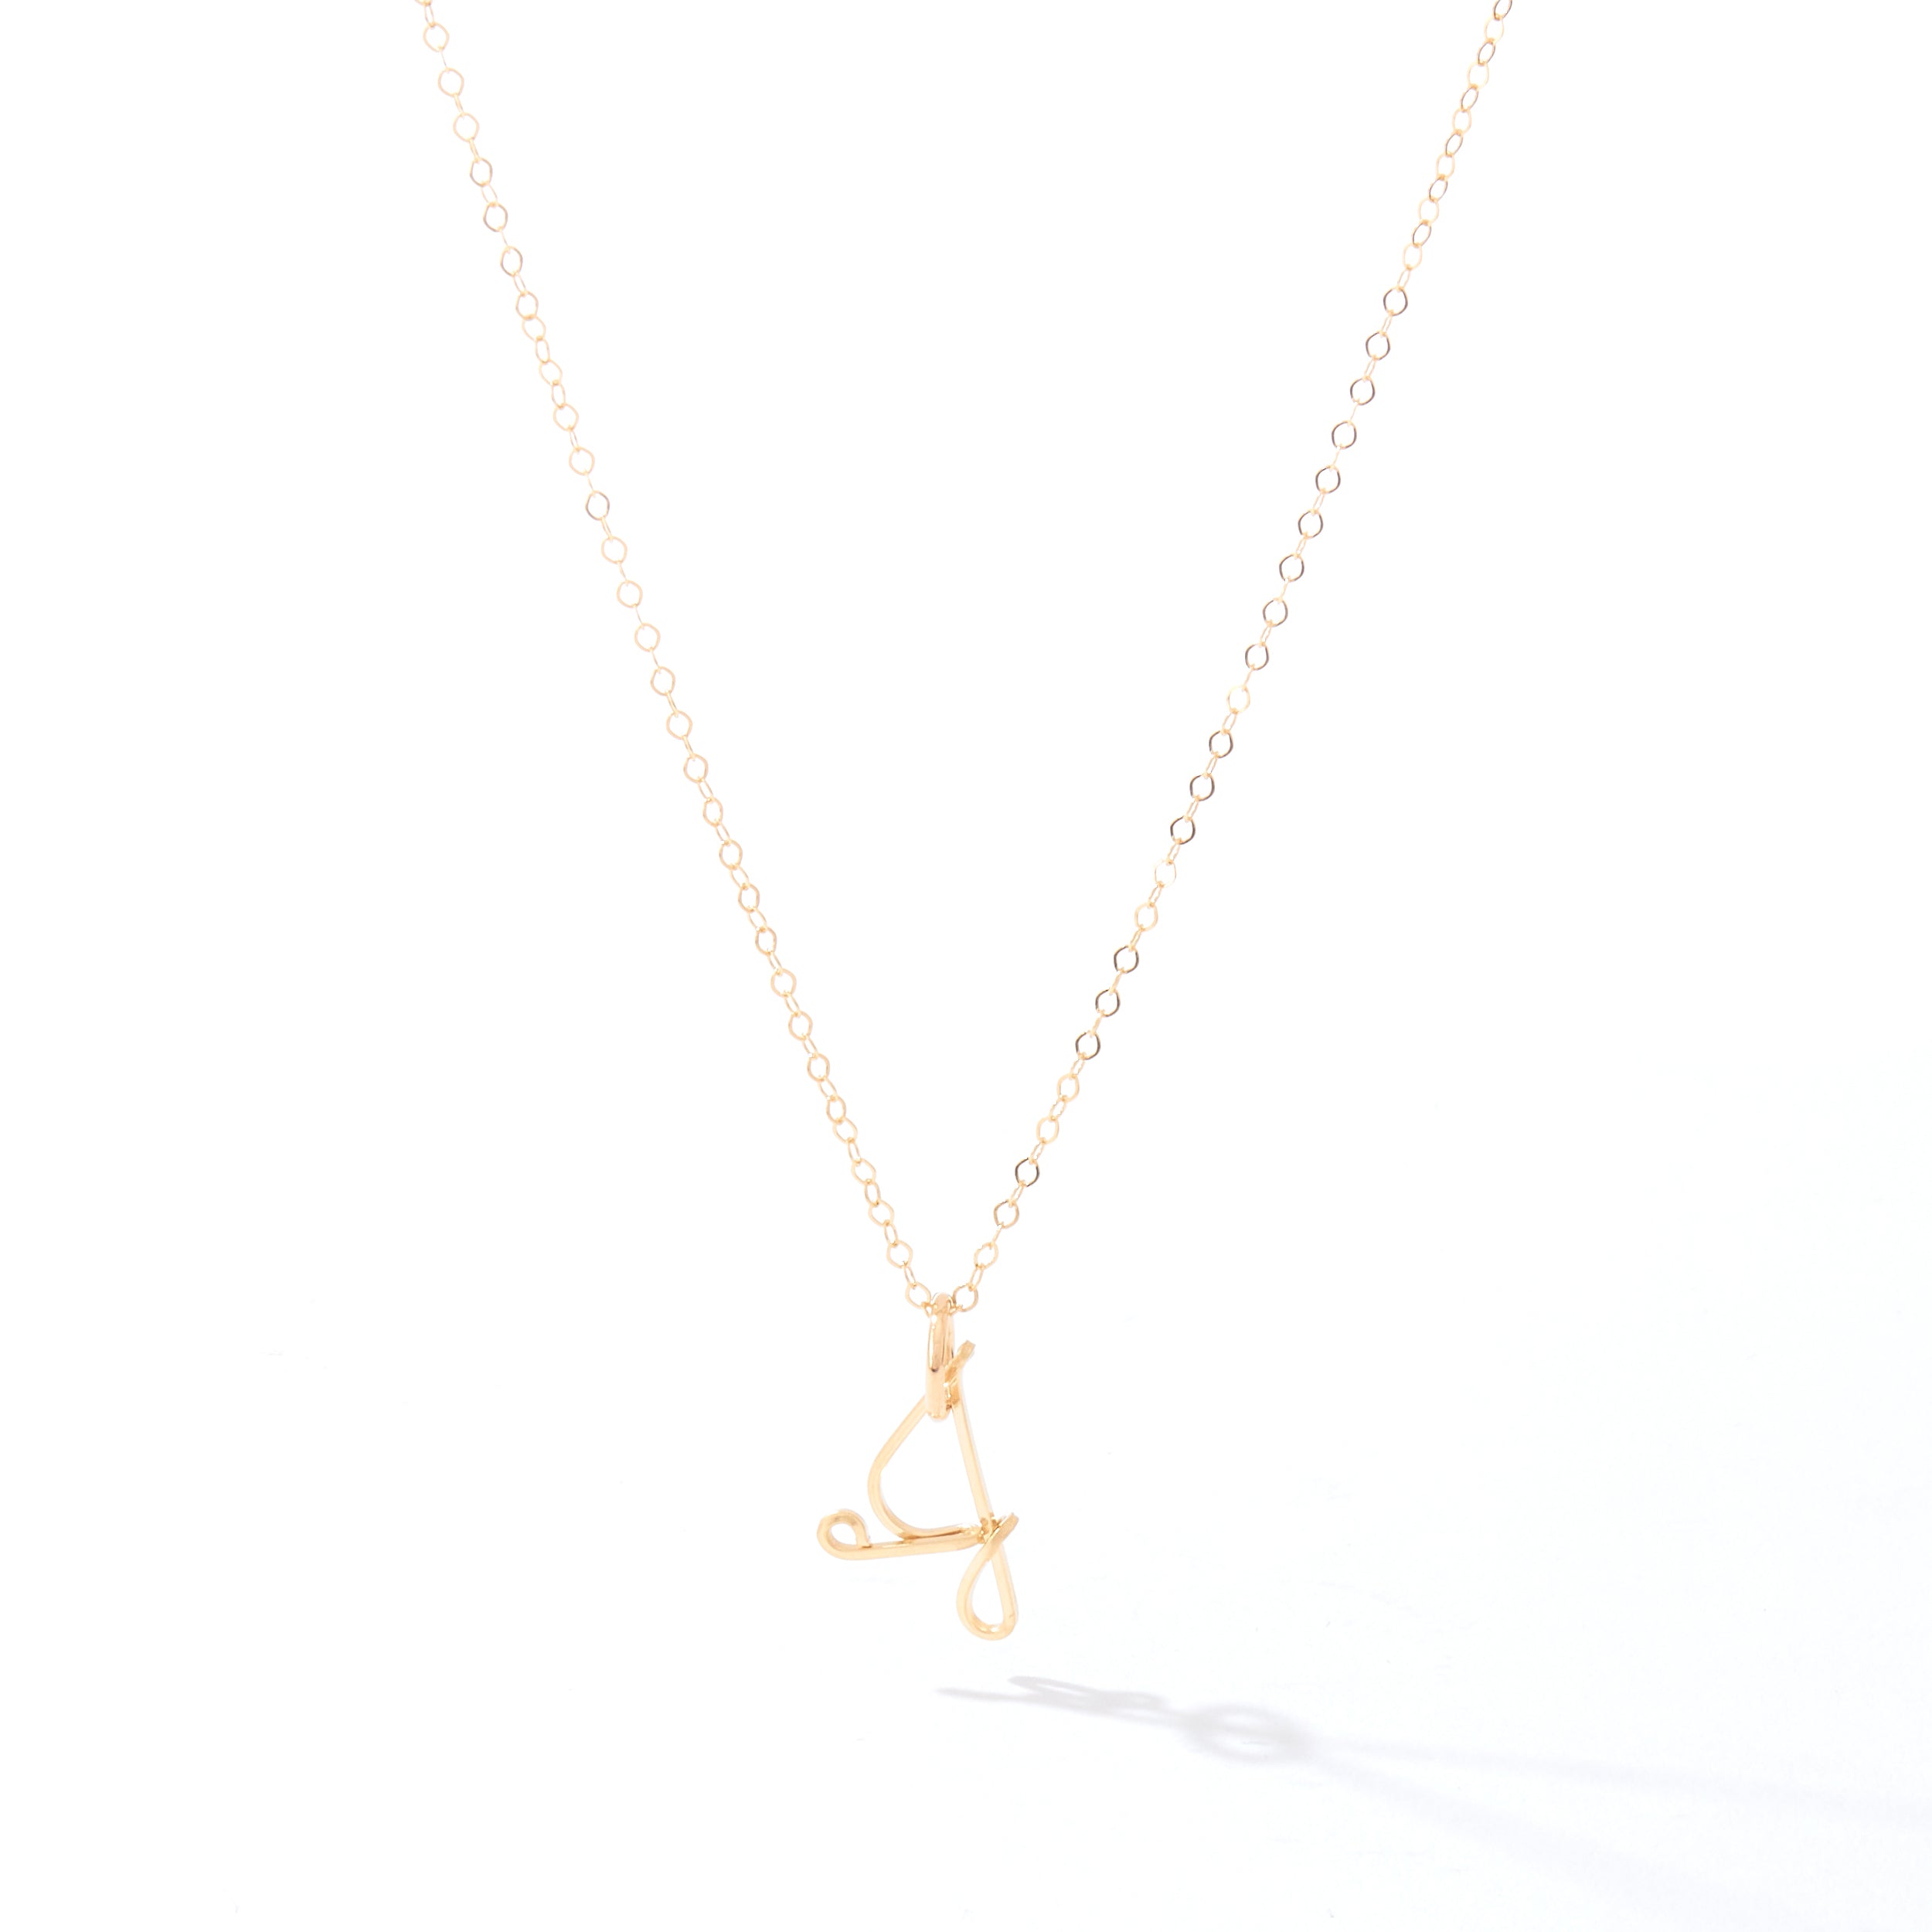 Diamond Initial Necklace White Gold - J. LUU